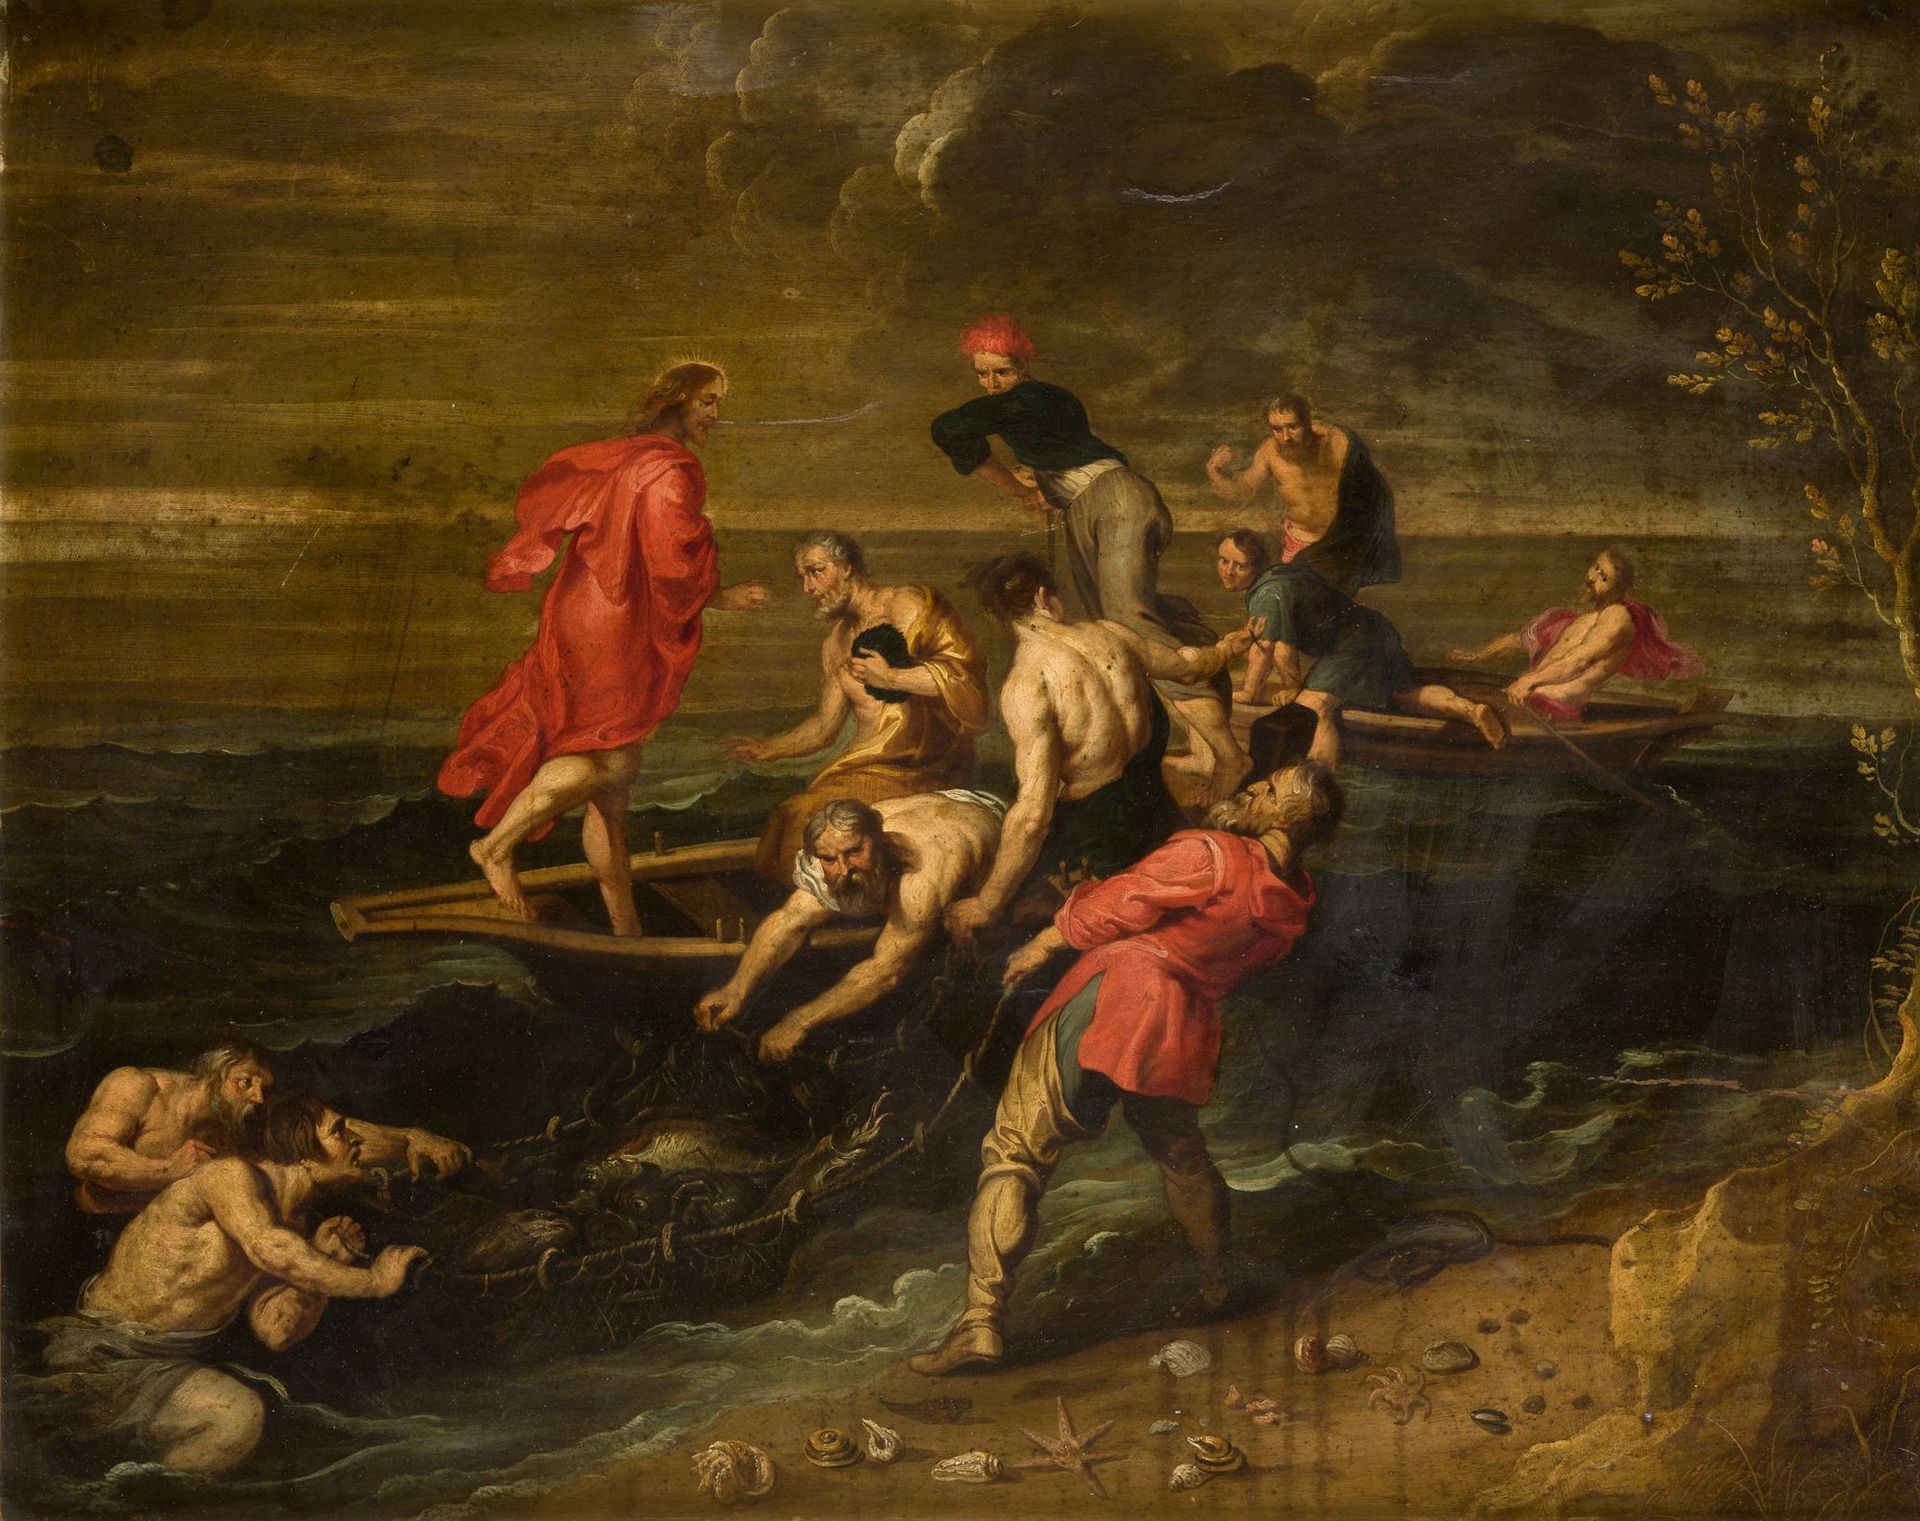 CIRCULO DE RUBENS (C. 17th / ?) "The miraculous catch" Óleo sobre cobre. 68 x 85&hellip;